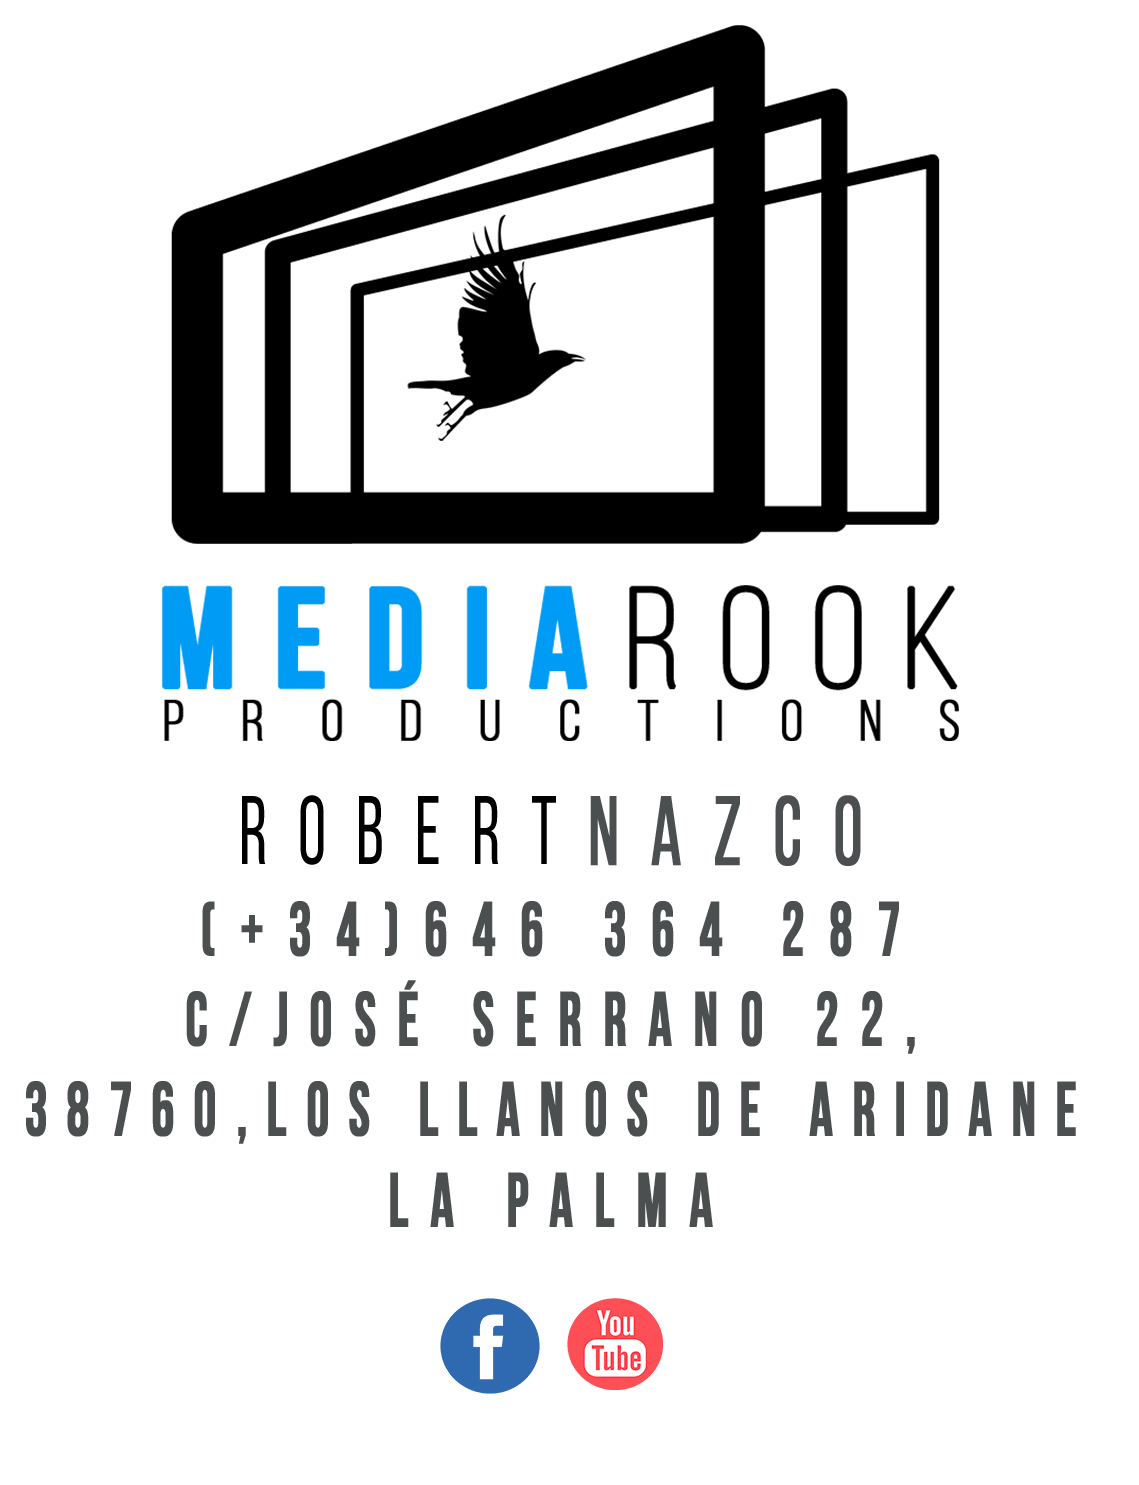 ComercioMediaRookProducctions50-Logo.png